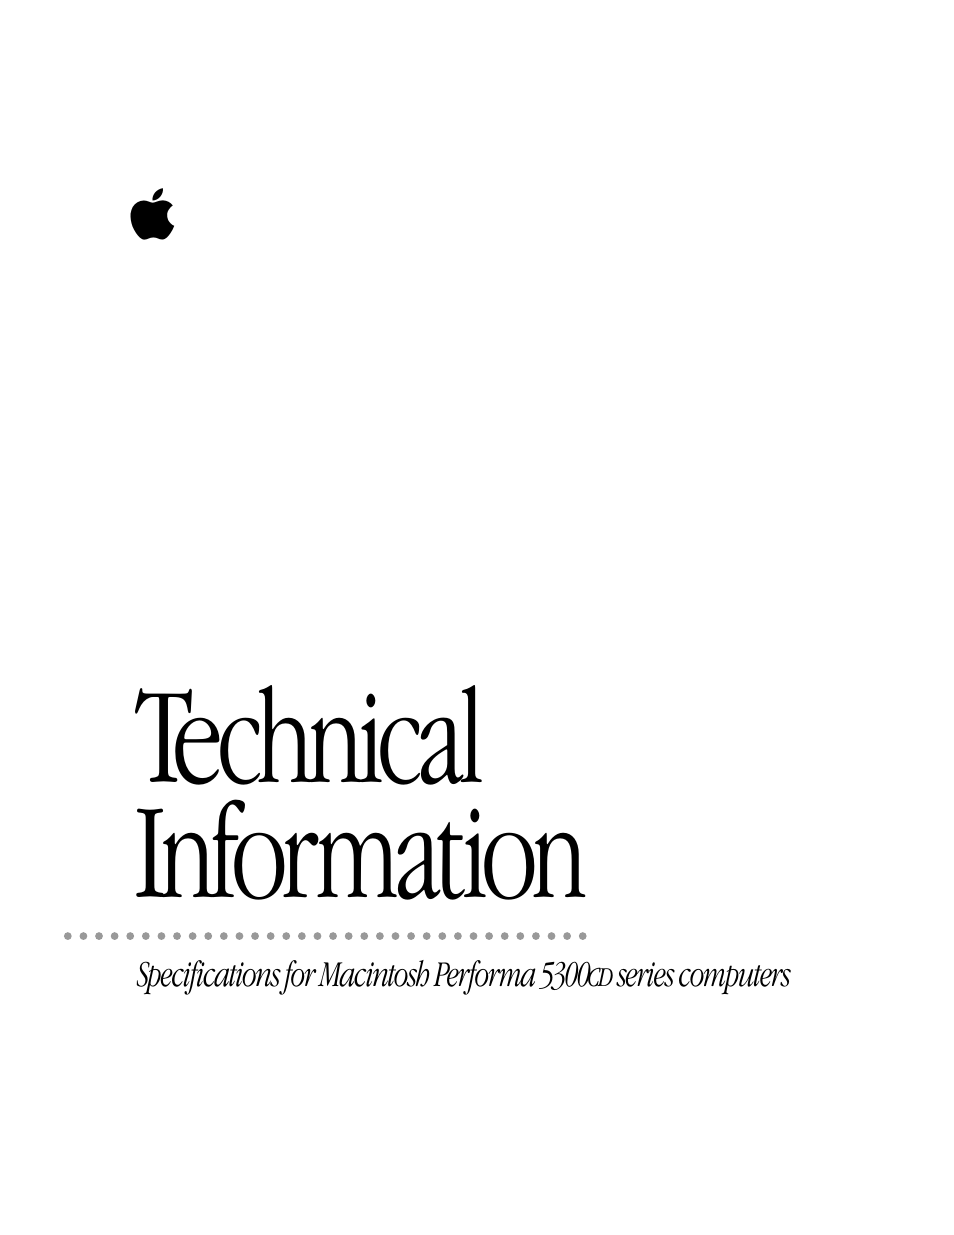 Mac Performa 5300 CD series (Tech informatiom)